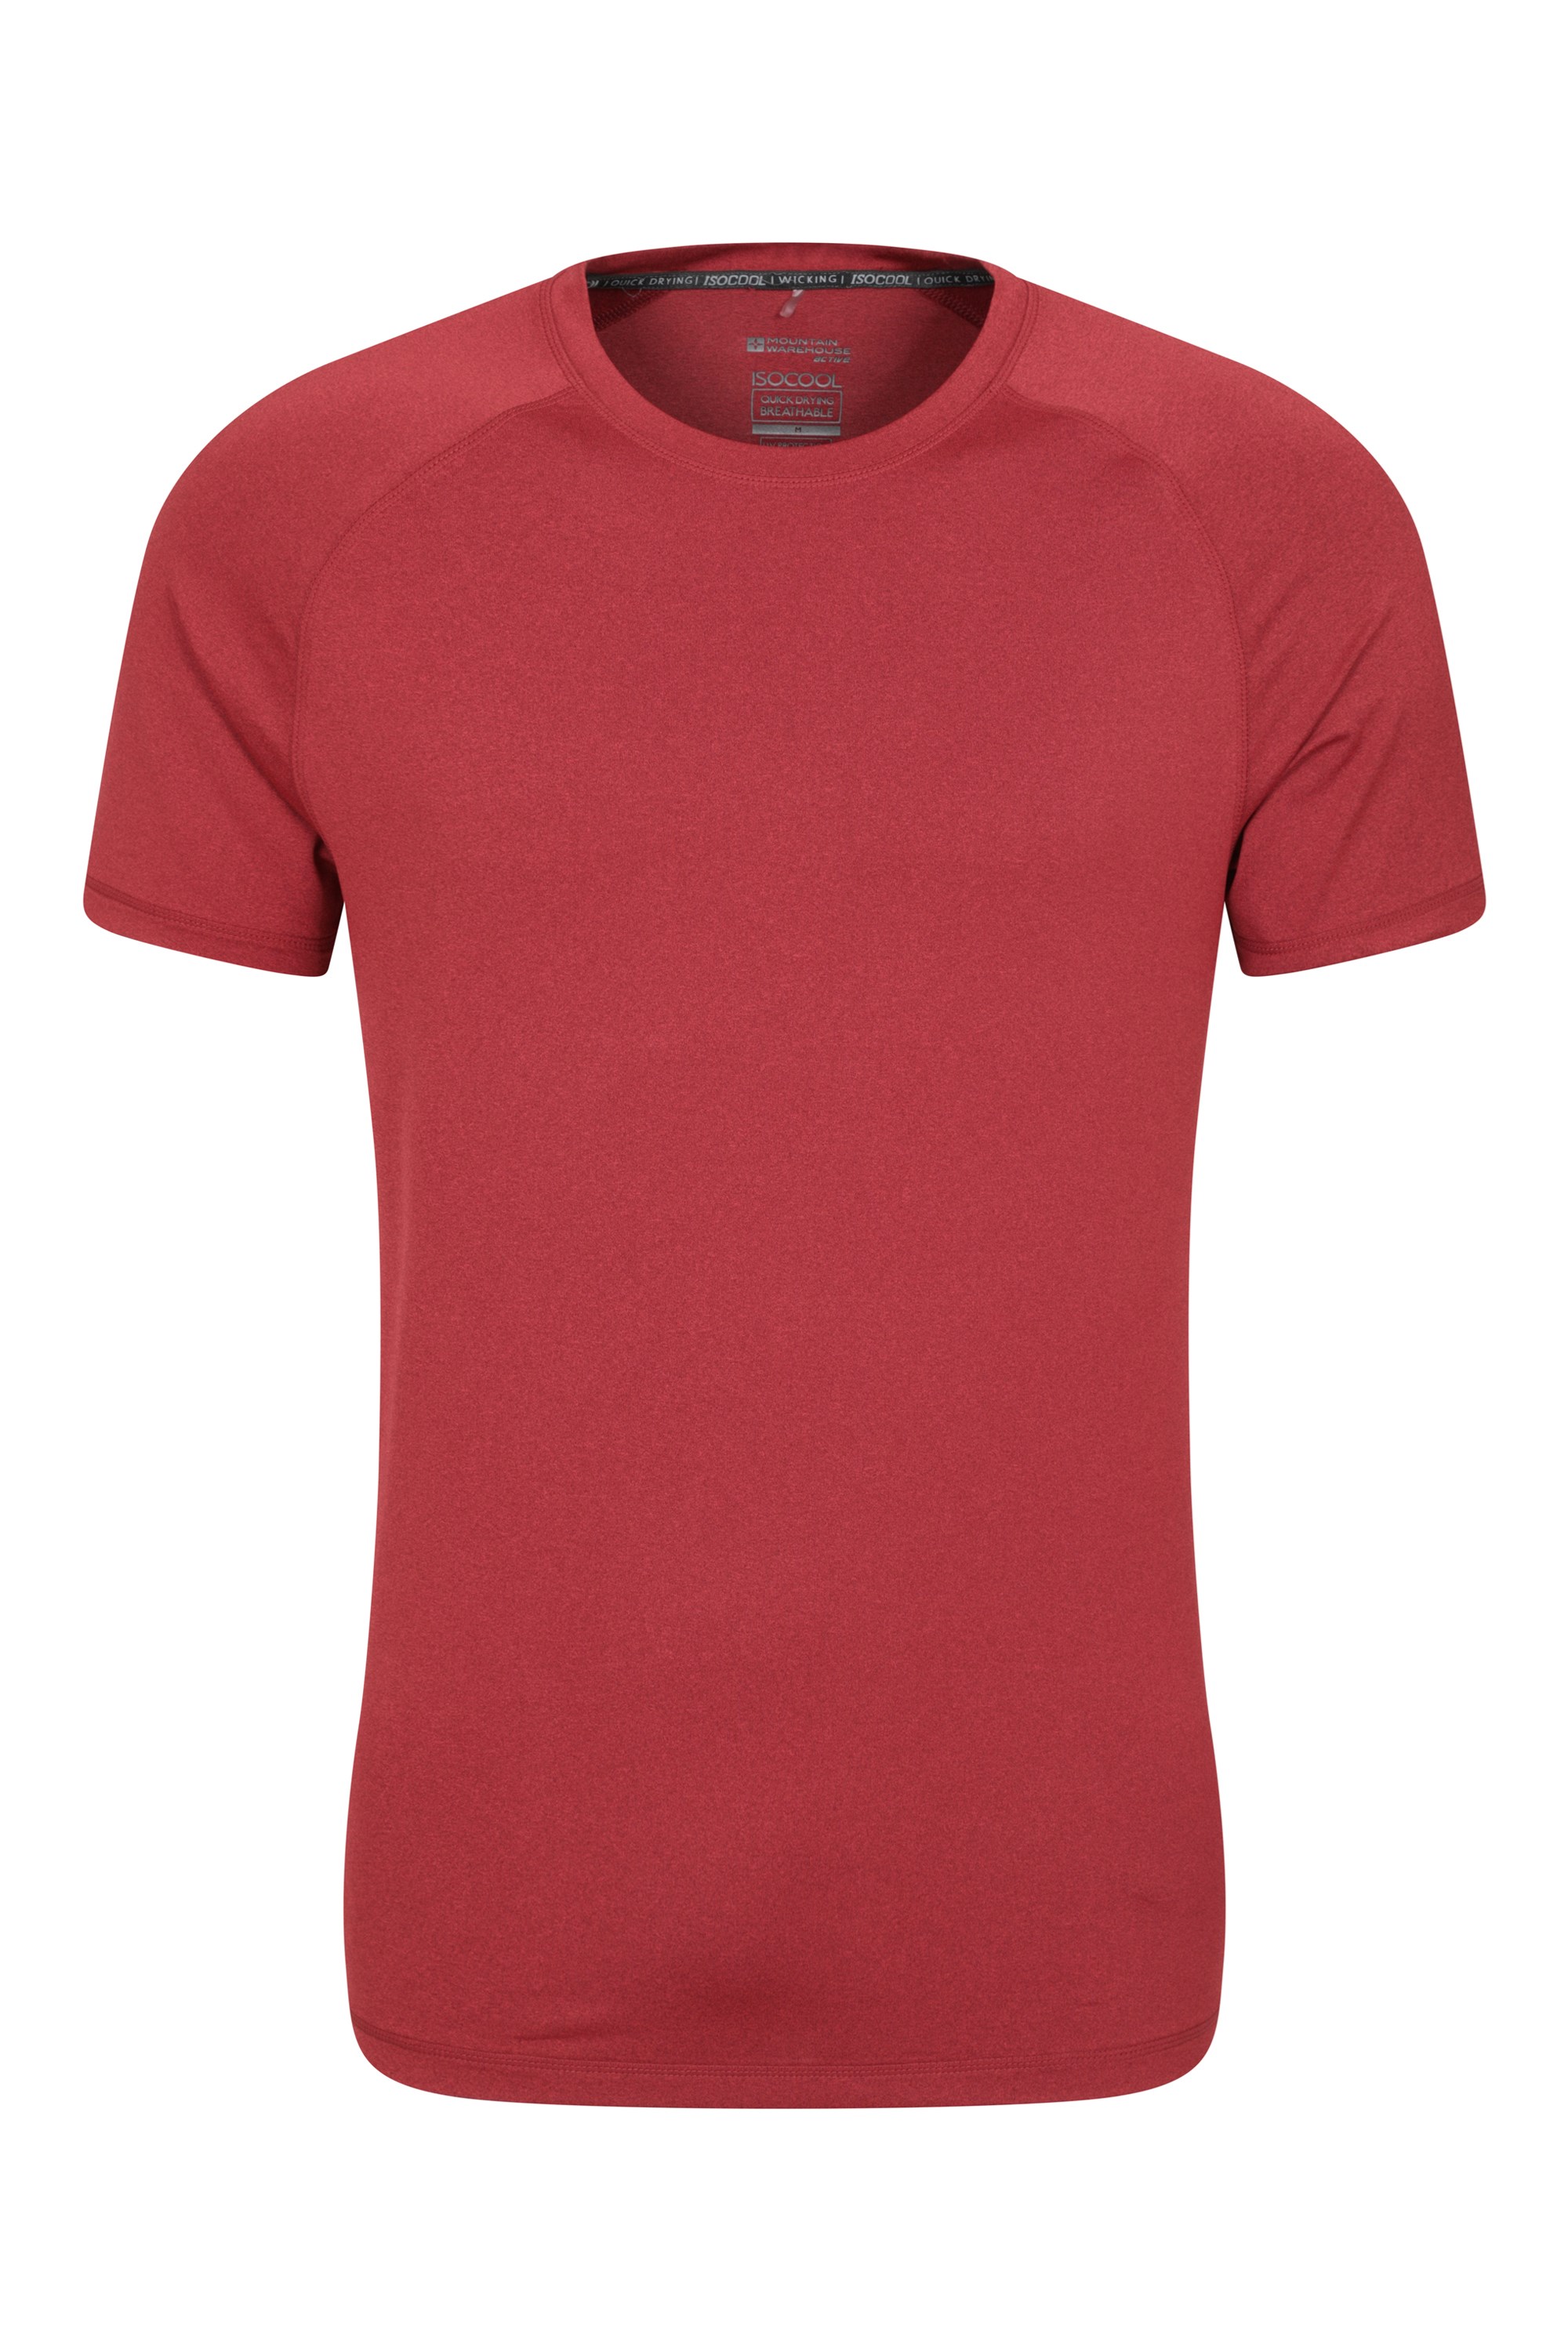 Mountain Warehouse Agra Mens Melange T Shirt Red